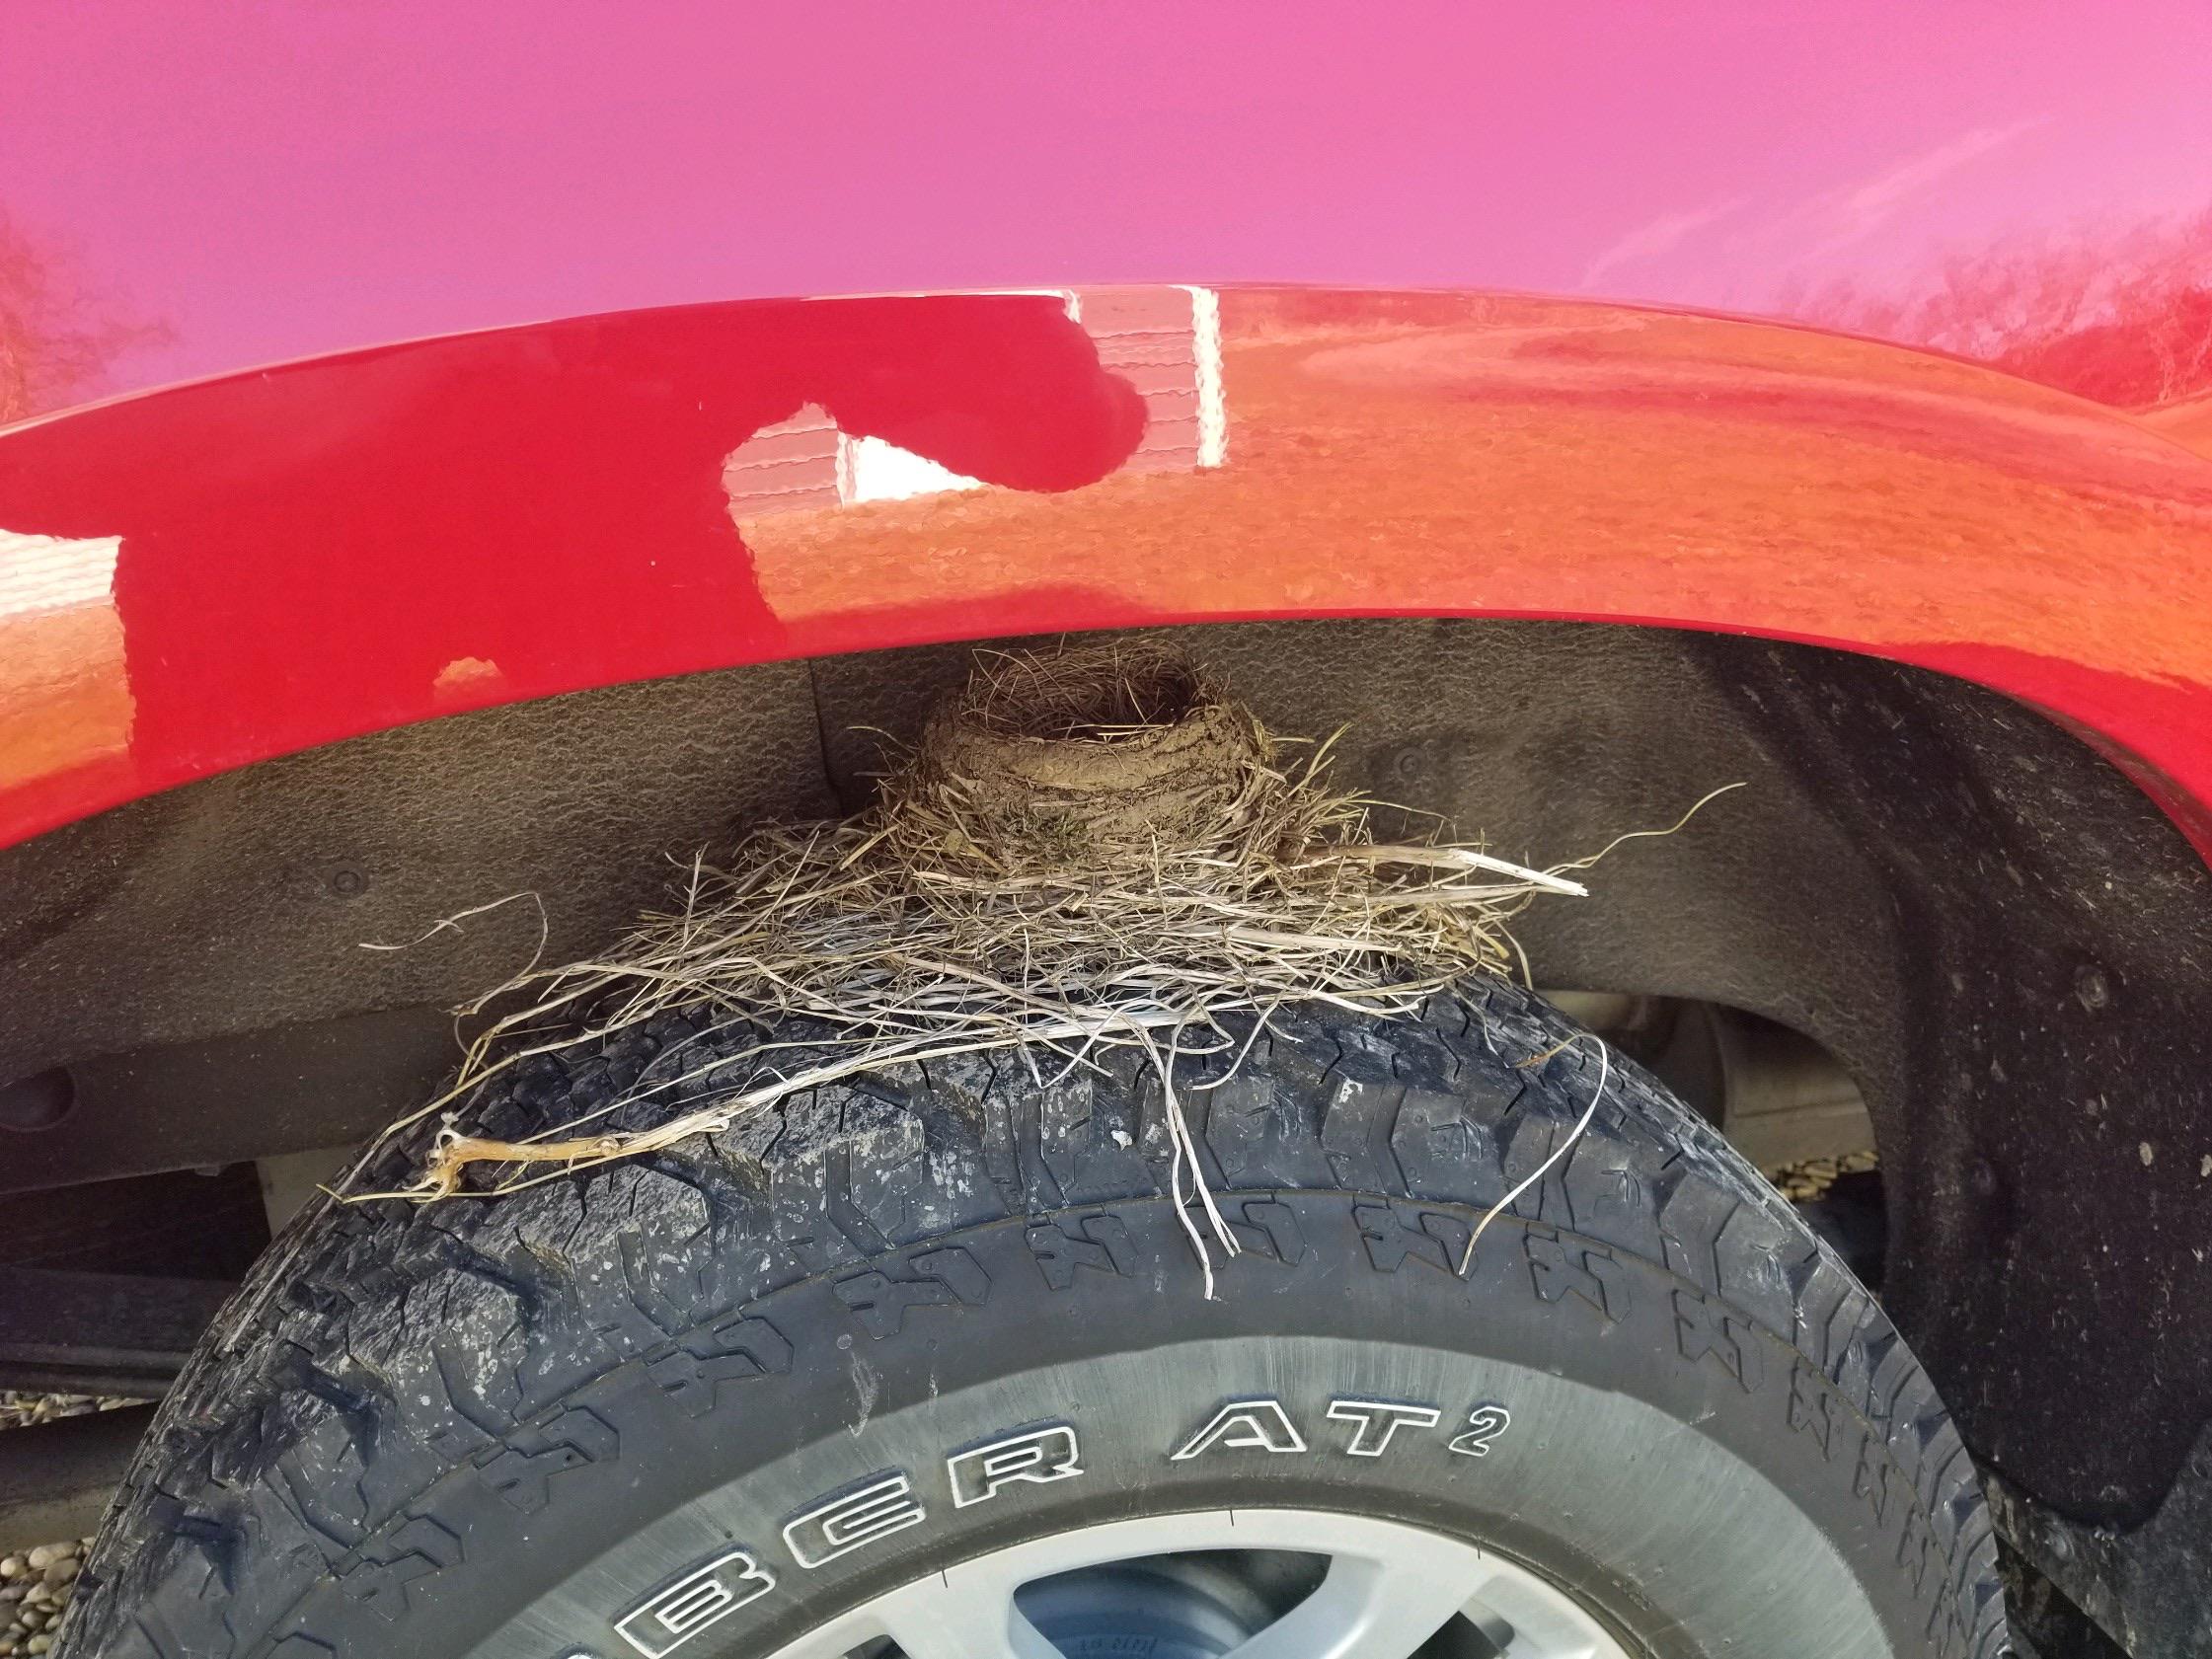 bird nest on top of car tire.